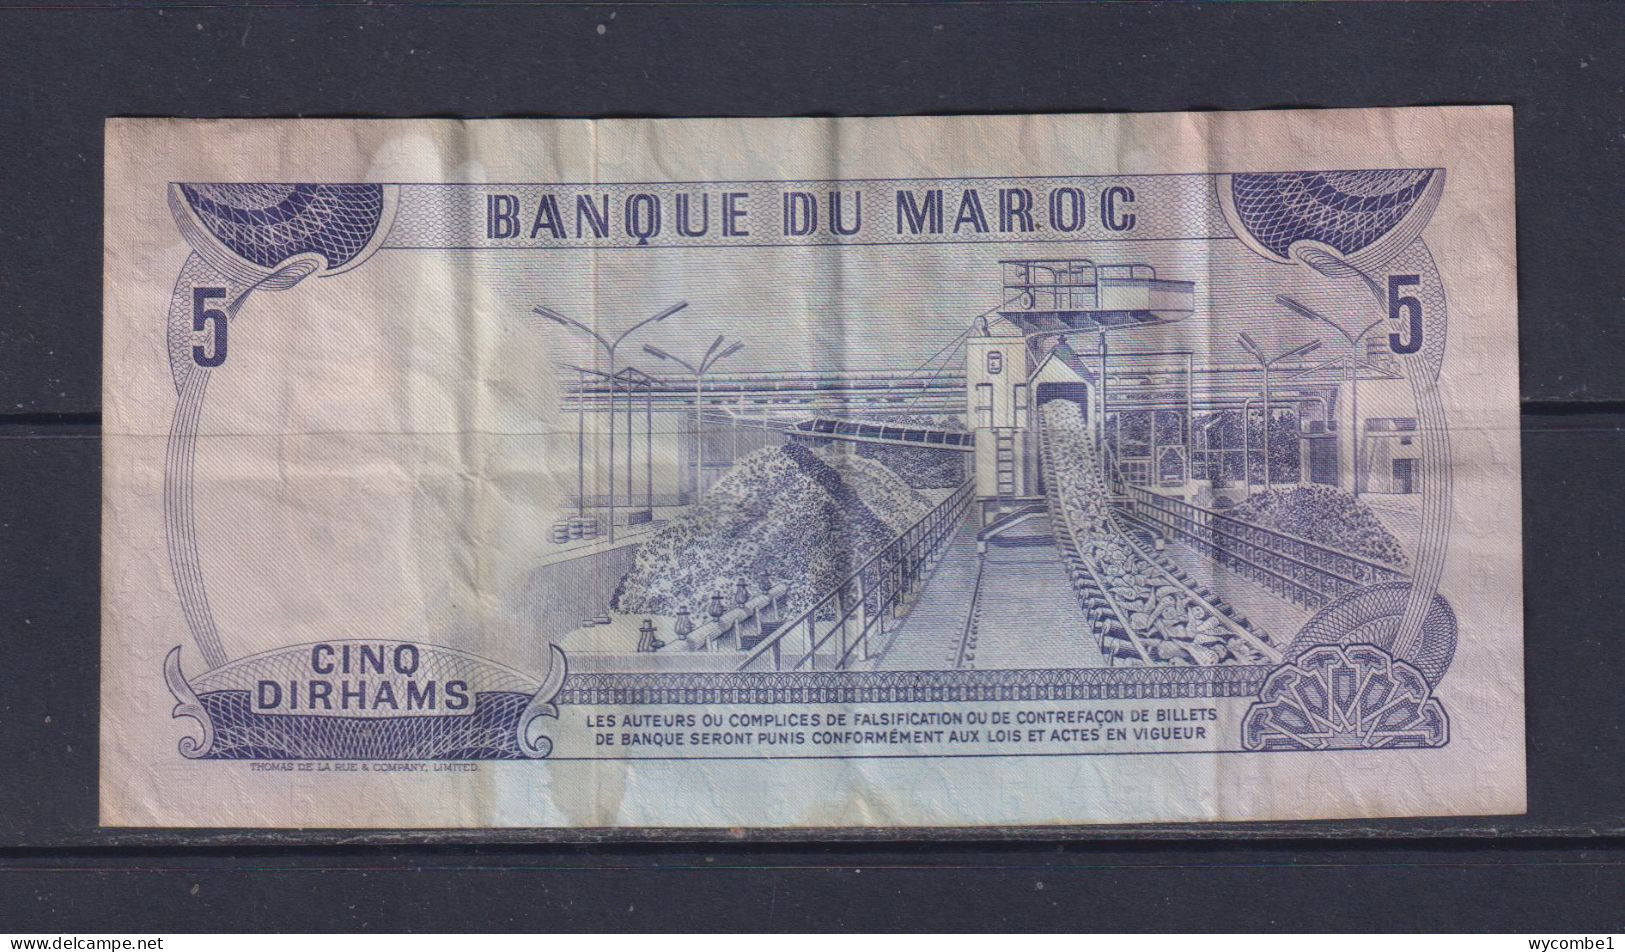 MOROCCO  - 1970 5 Dirhams Circulated Banknote - Morocco